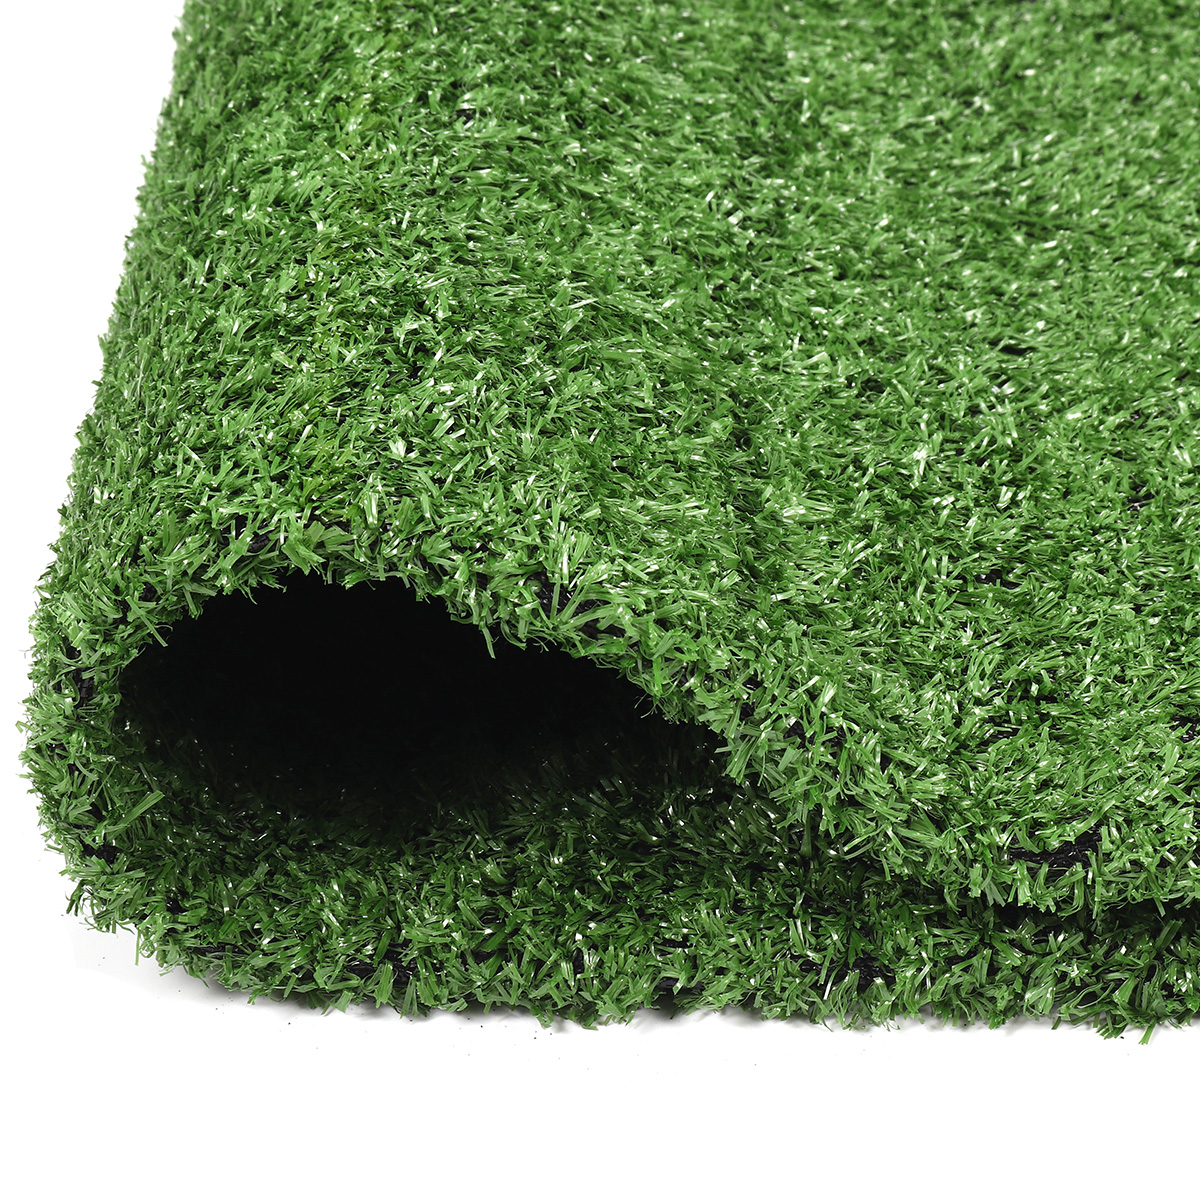 Artificial-Synthetic-Lawn-Turf-Plastic-Green-Plant-Grass-Garden-Decor-1694876-7